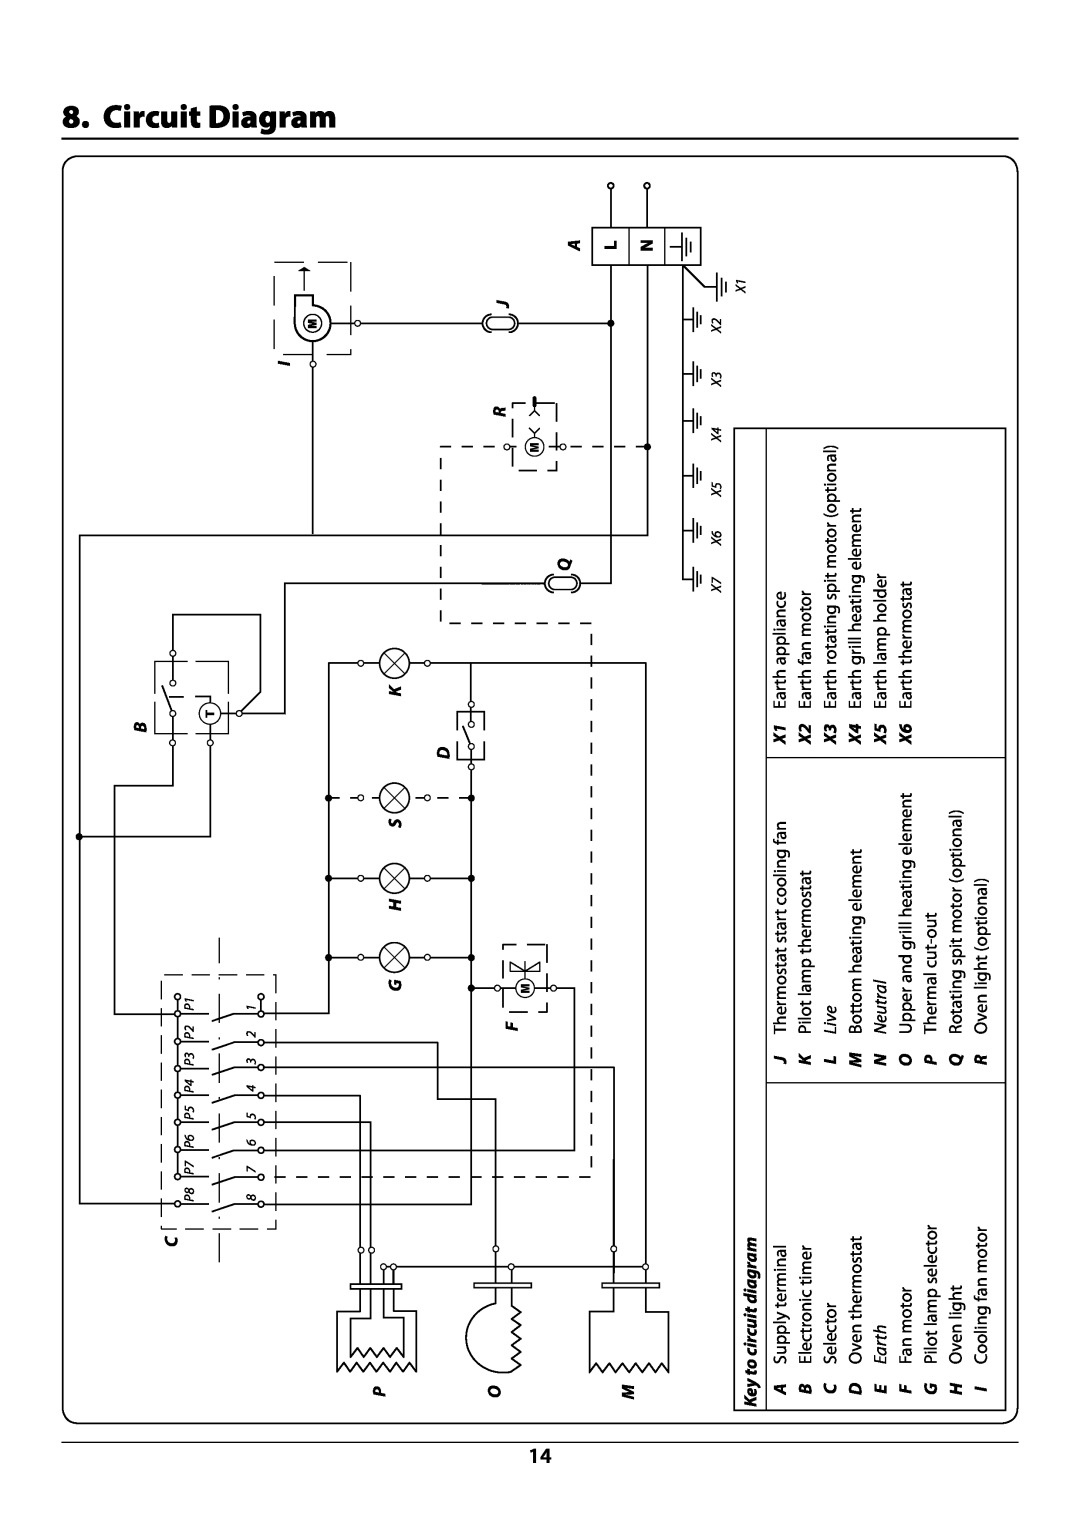 Rangemaster manual Circuit Diagram, Live, Earth, Neutral, DocNo.094-0002 - Circuit diagram - R609 oven 